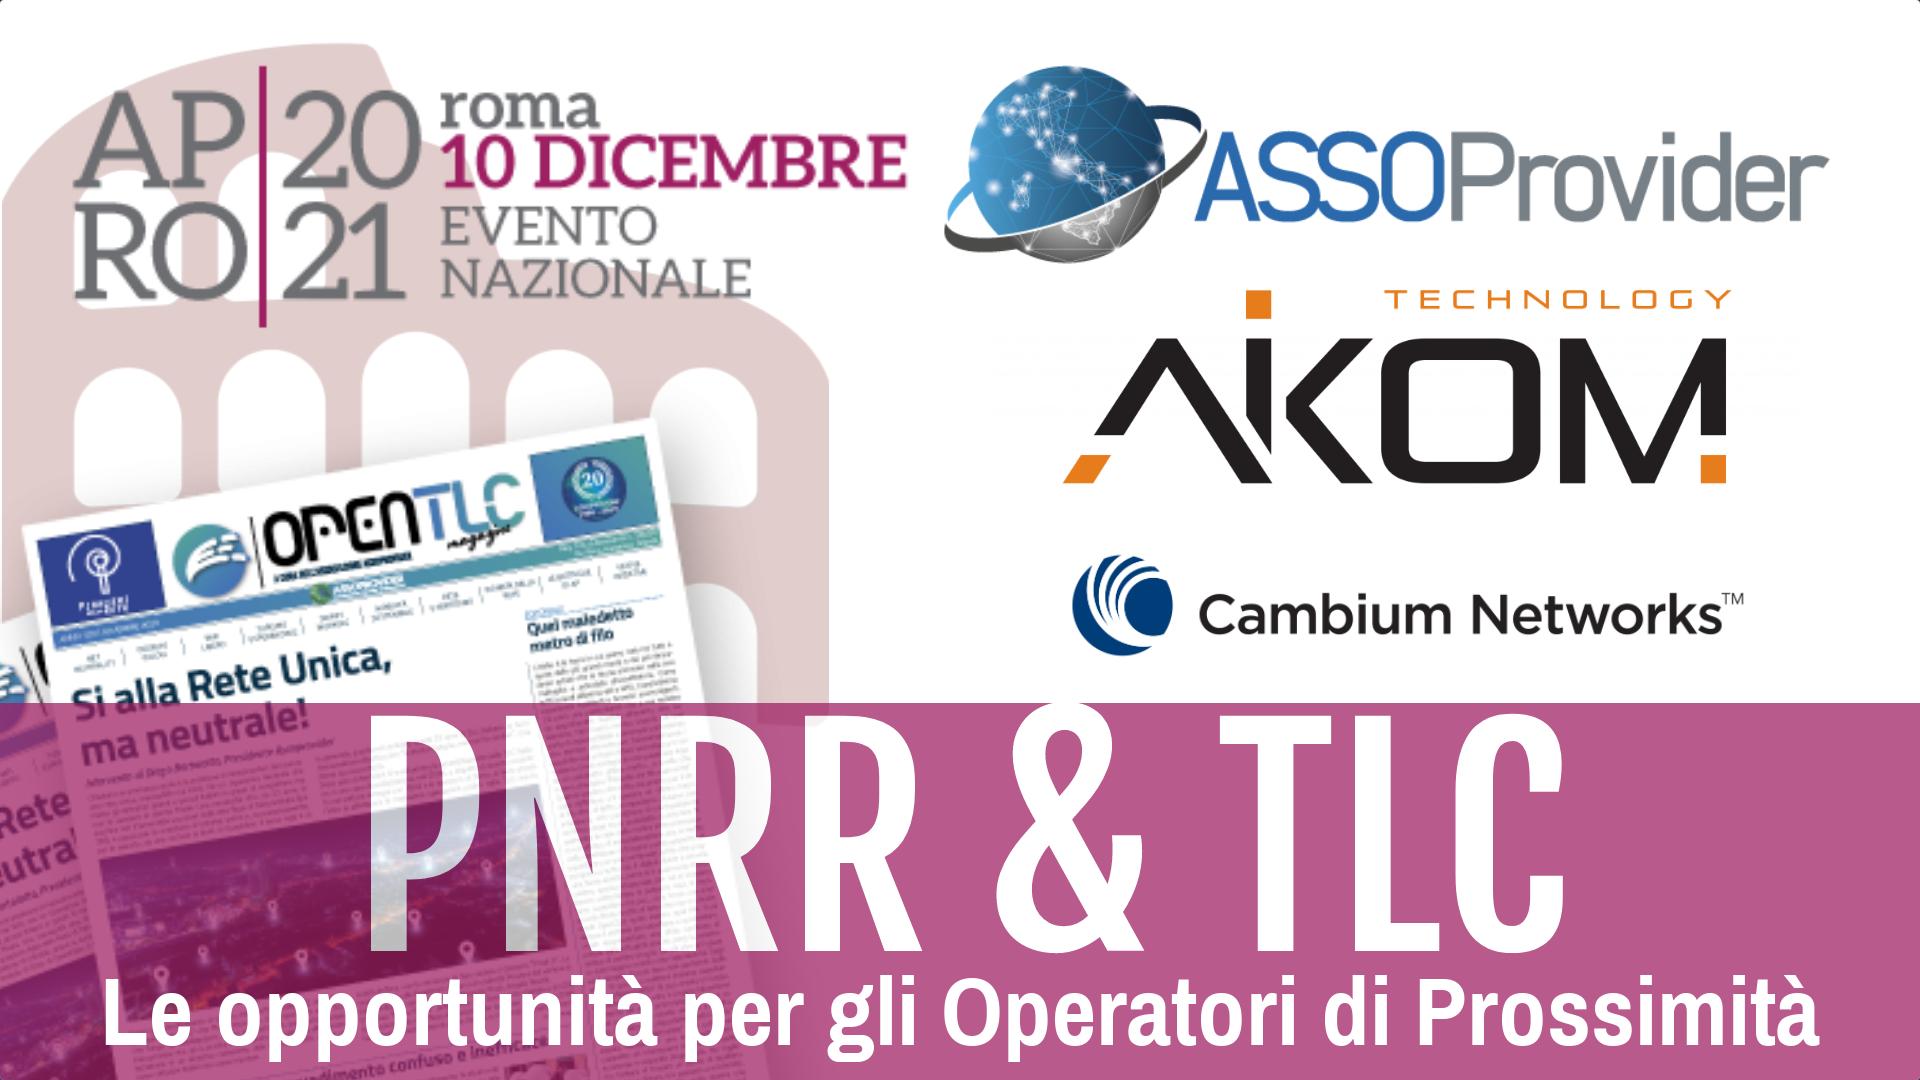 Aikom è sponsor APRO21, l’evento annuale Assoprovider